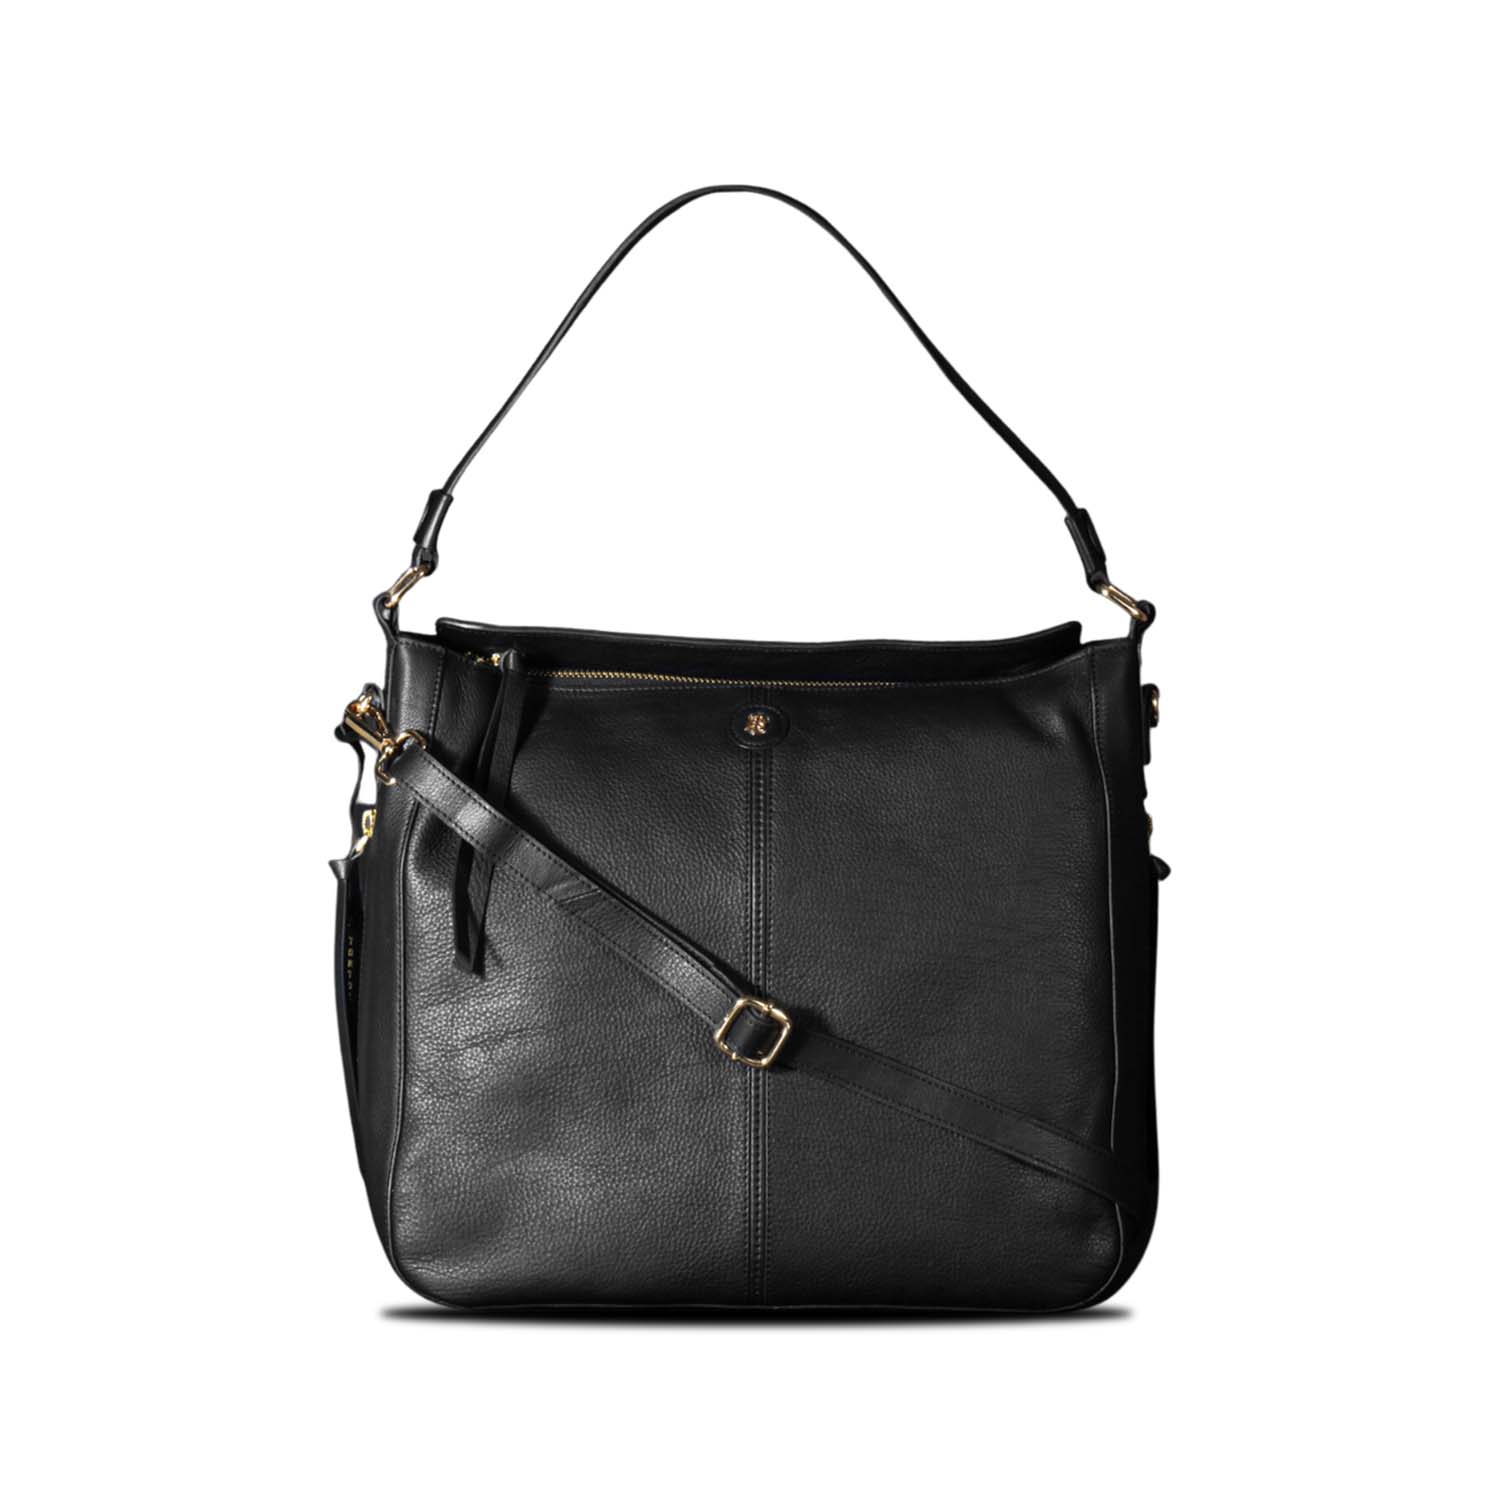 Ivanna - The Handbag/Sling Bag -  Black - Tortoise  